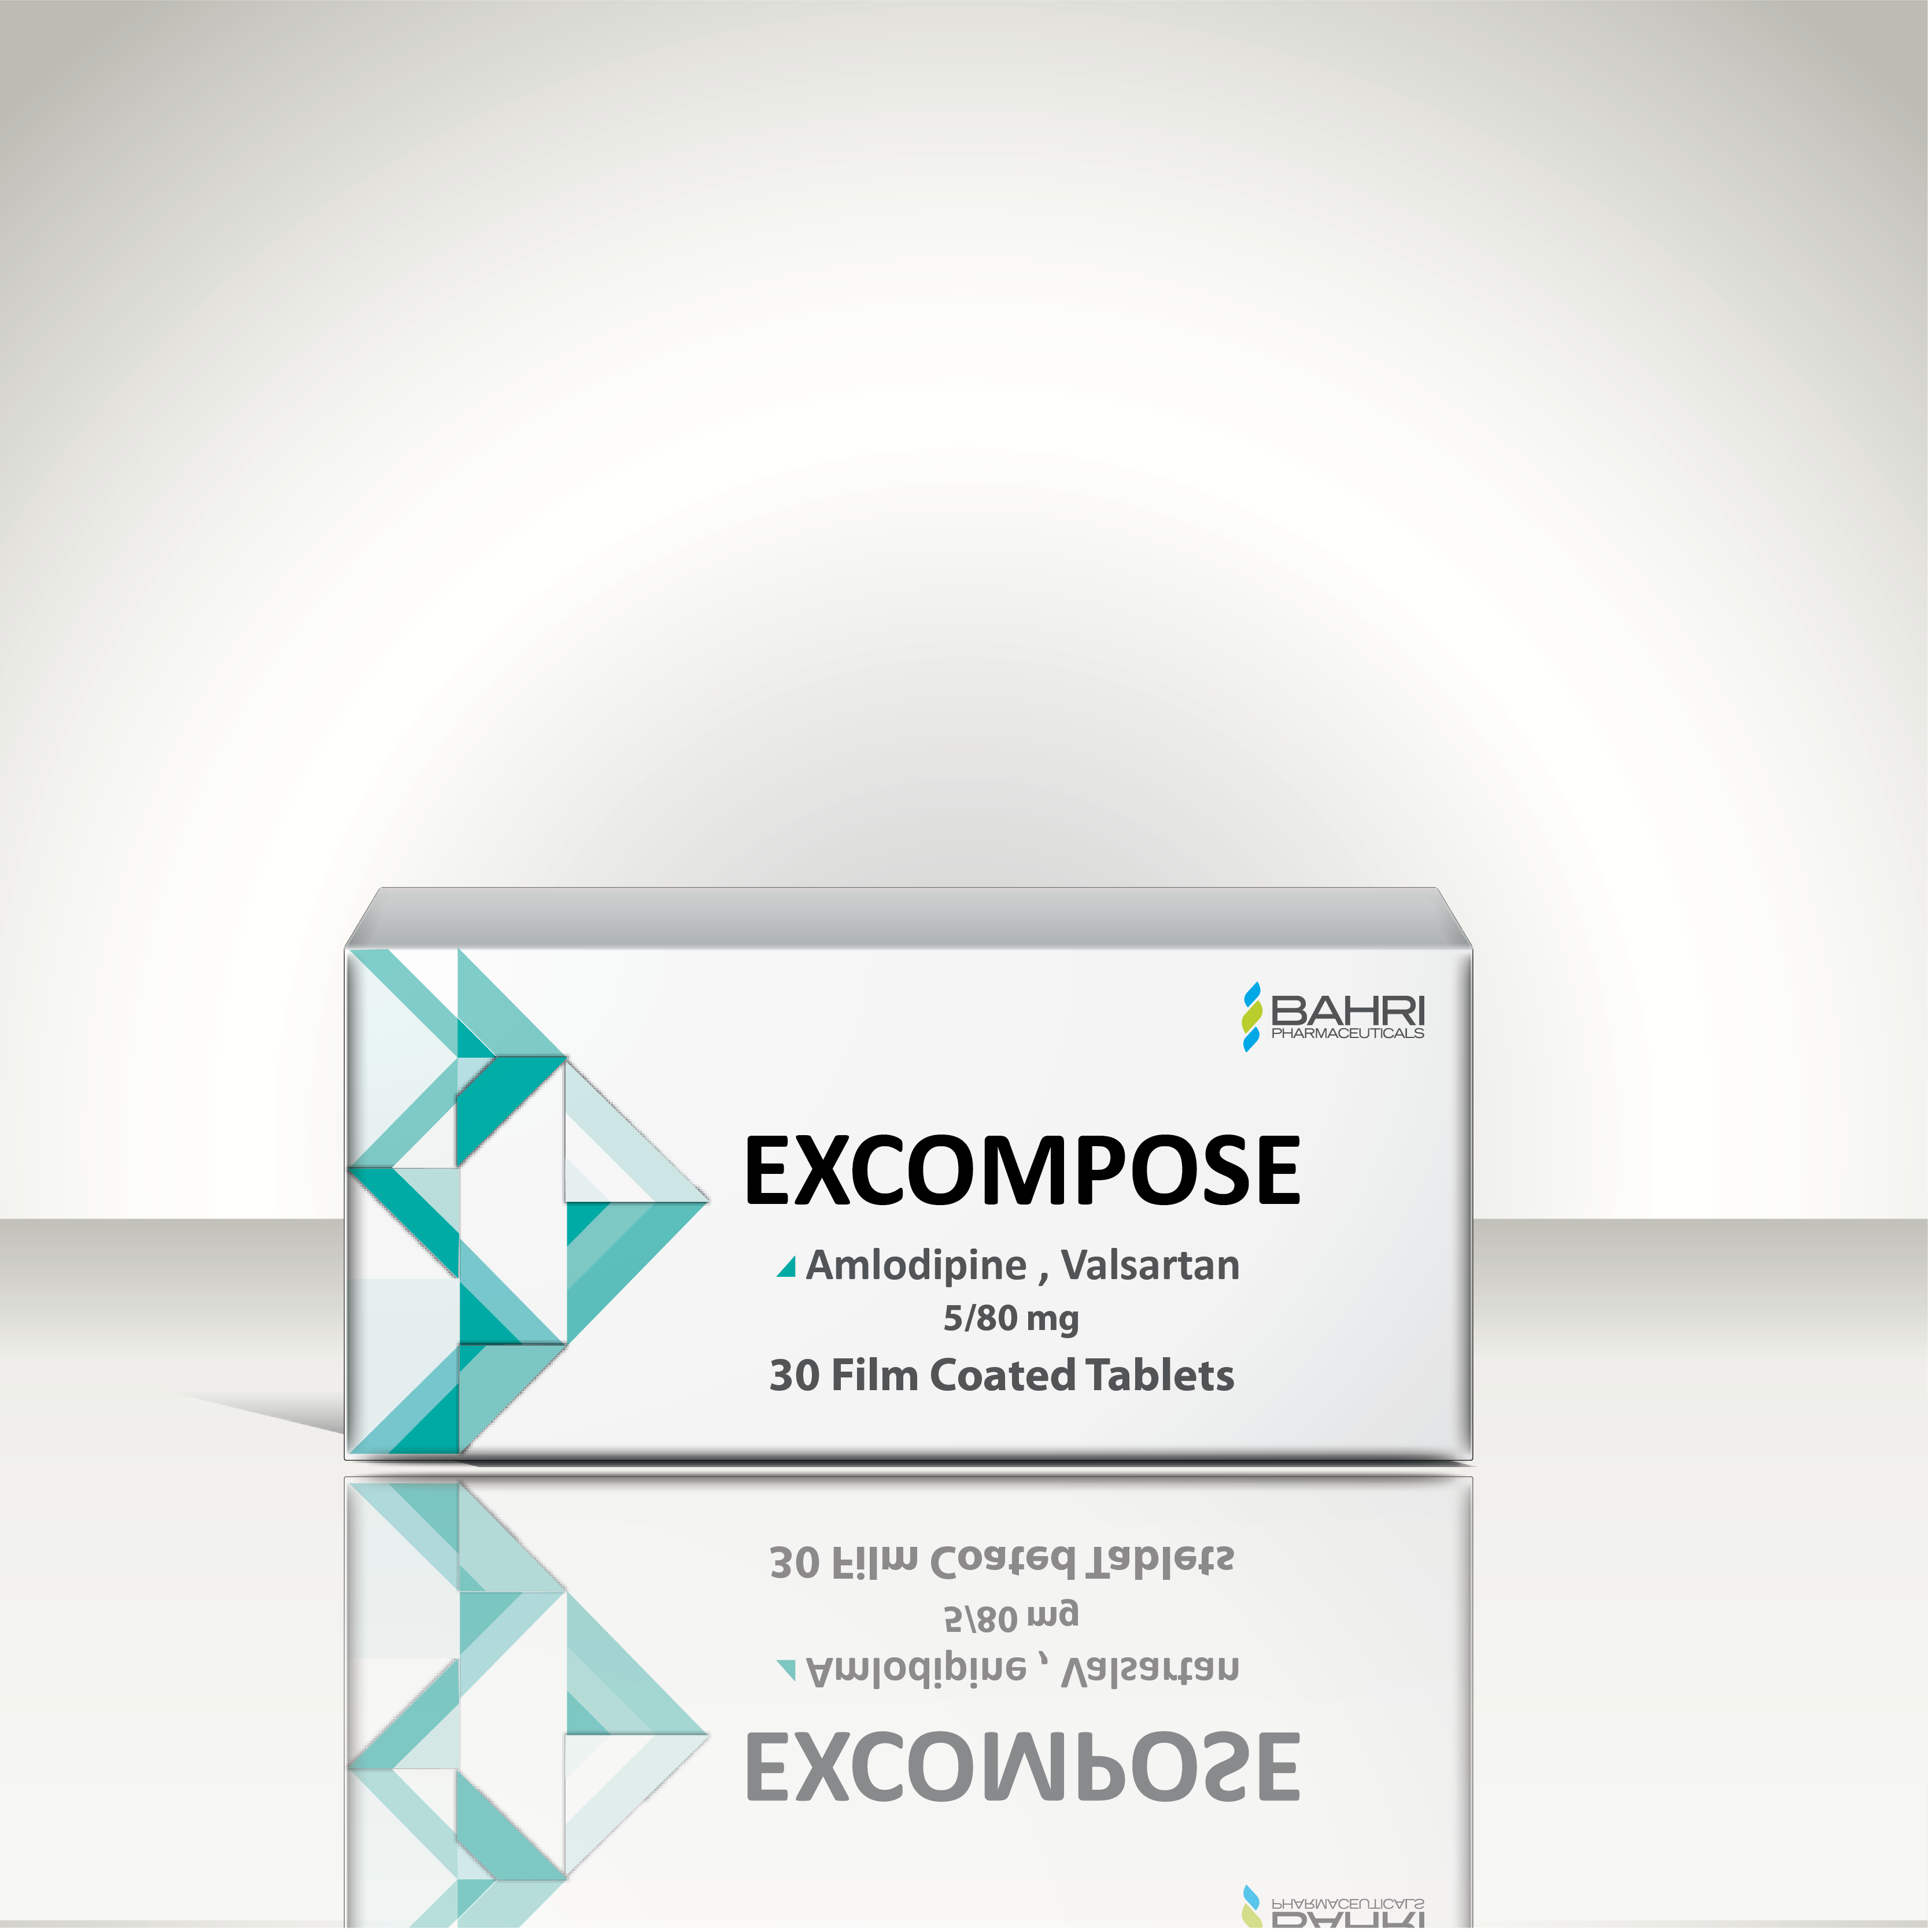 Excompose